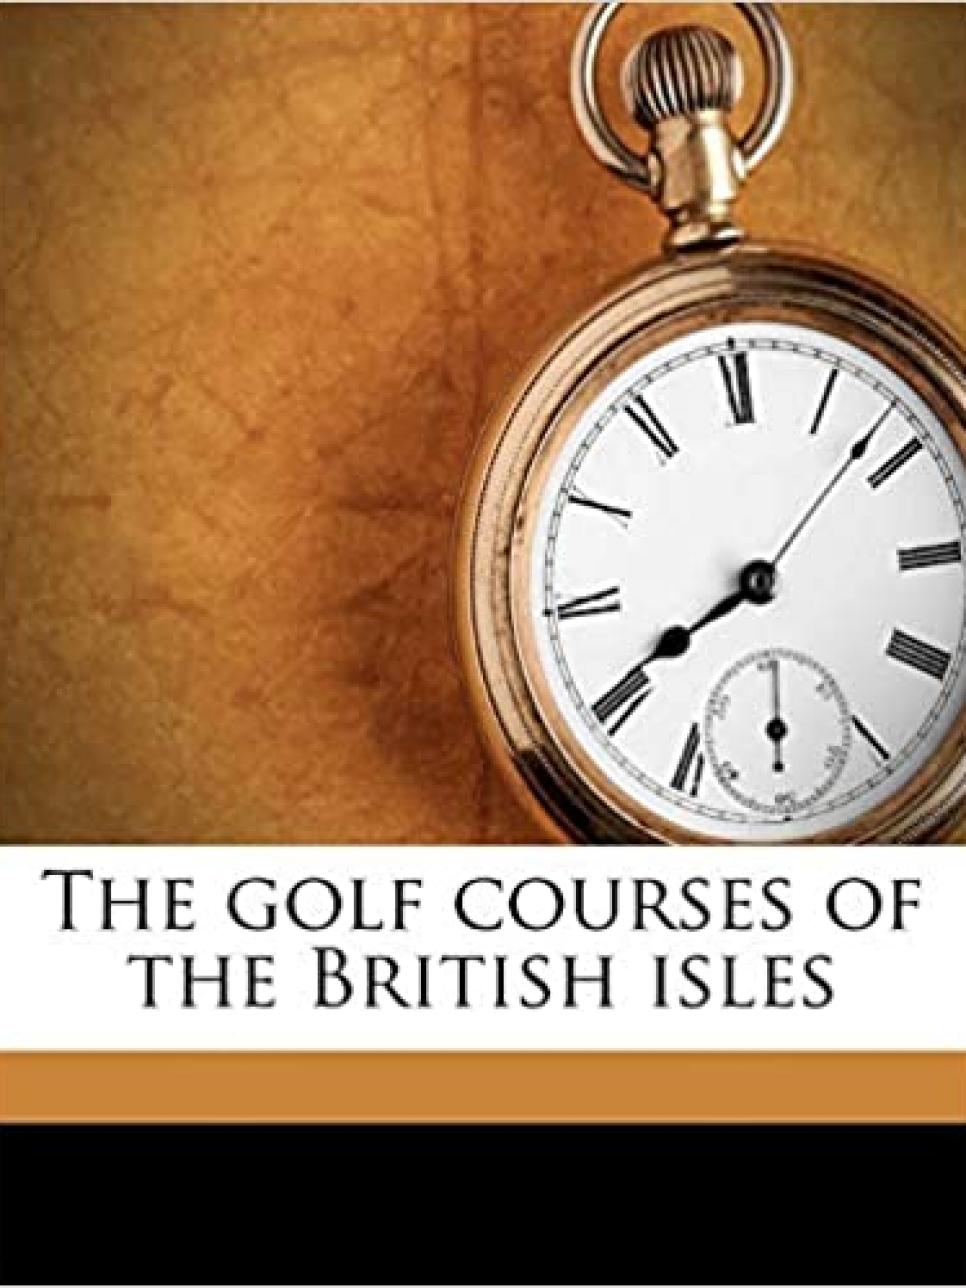 rx-amazonthe-golf-courses-of-the-british-isles-by-bernard-darwin-1910.jpeg